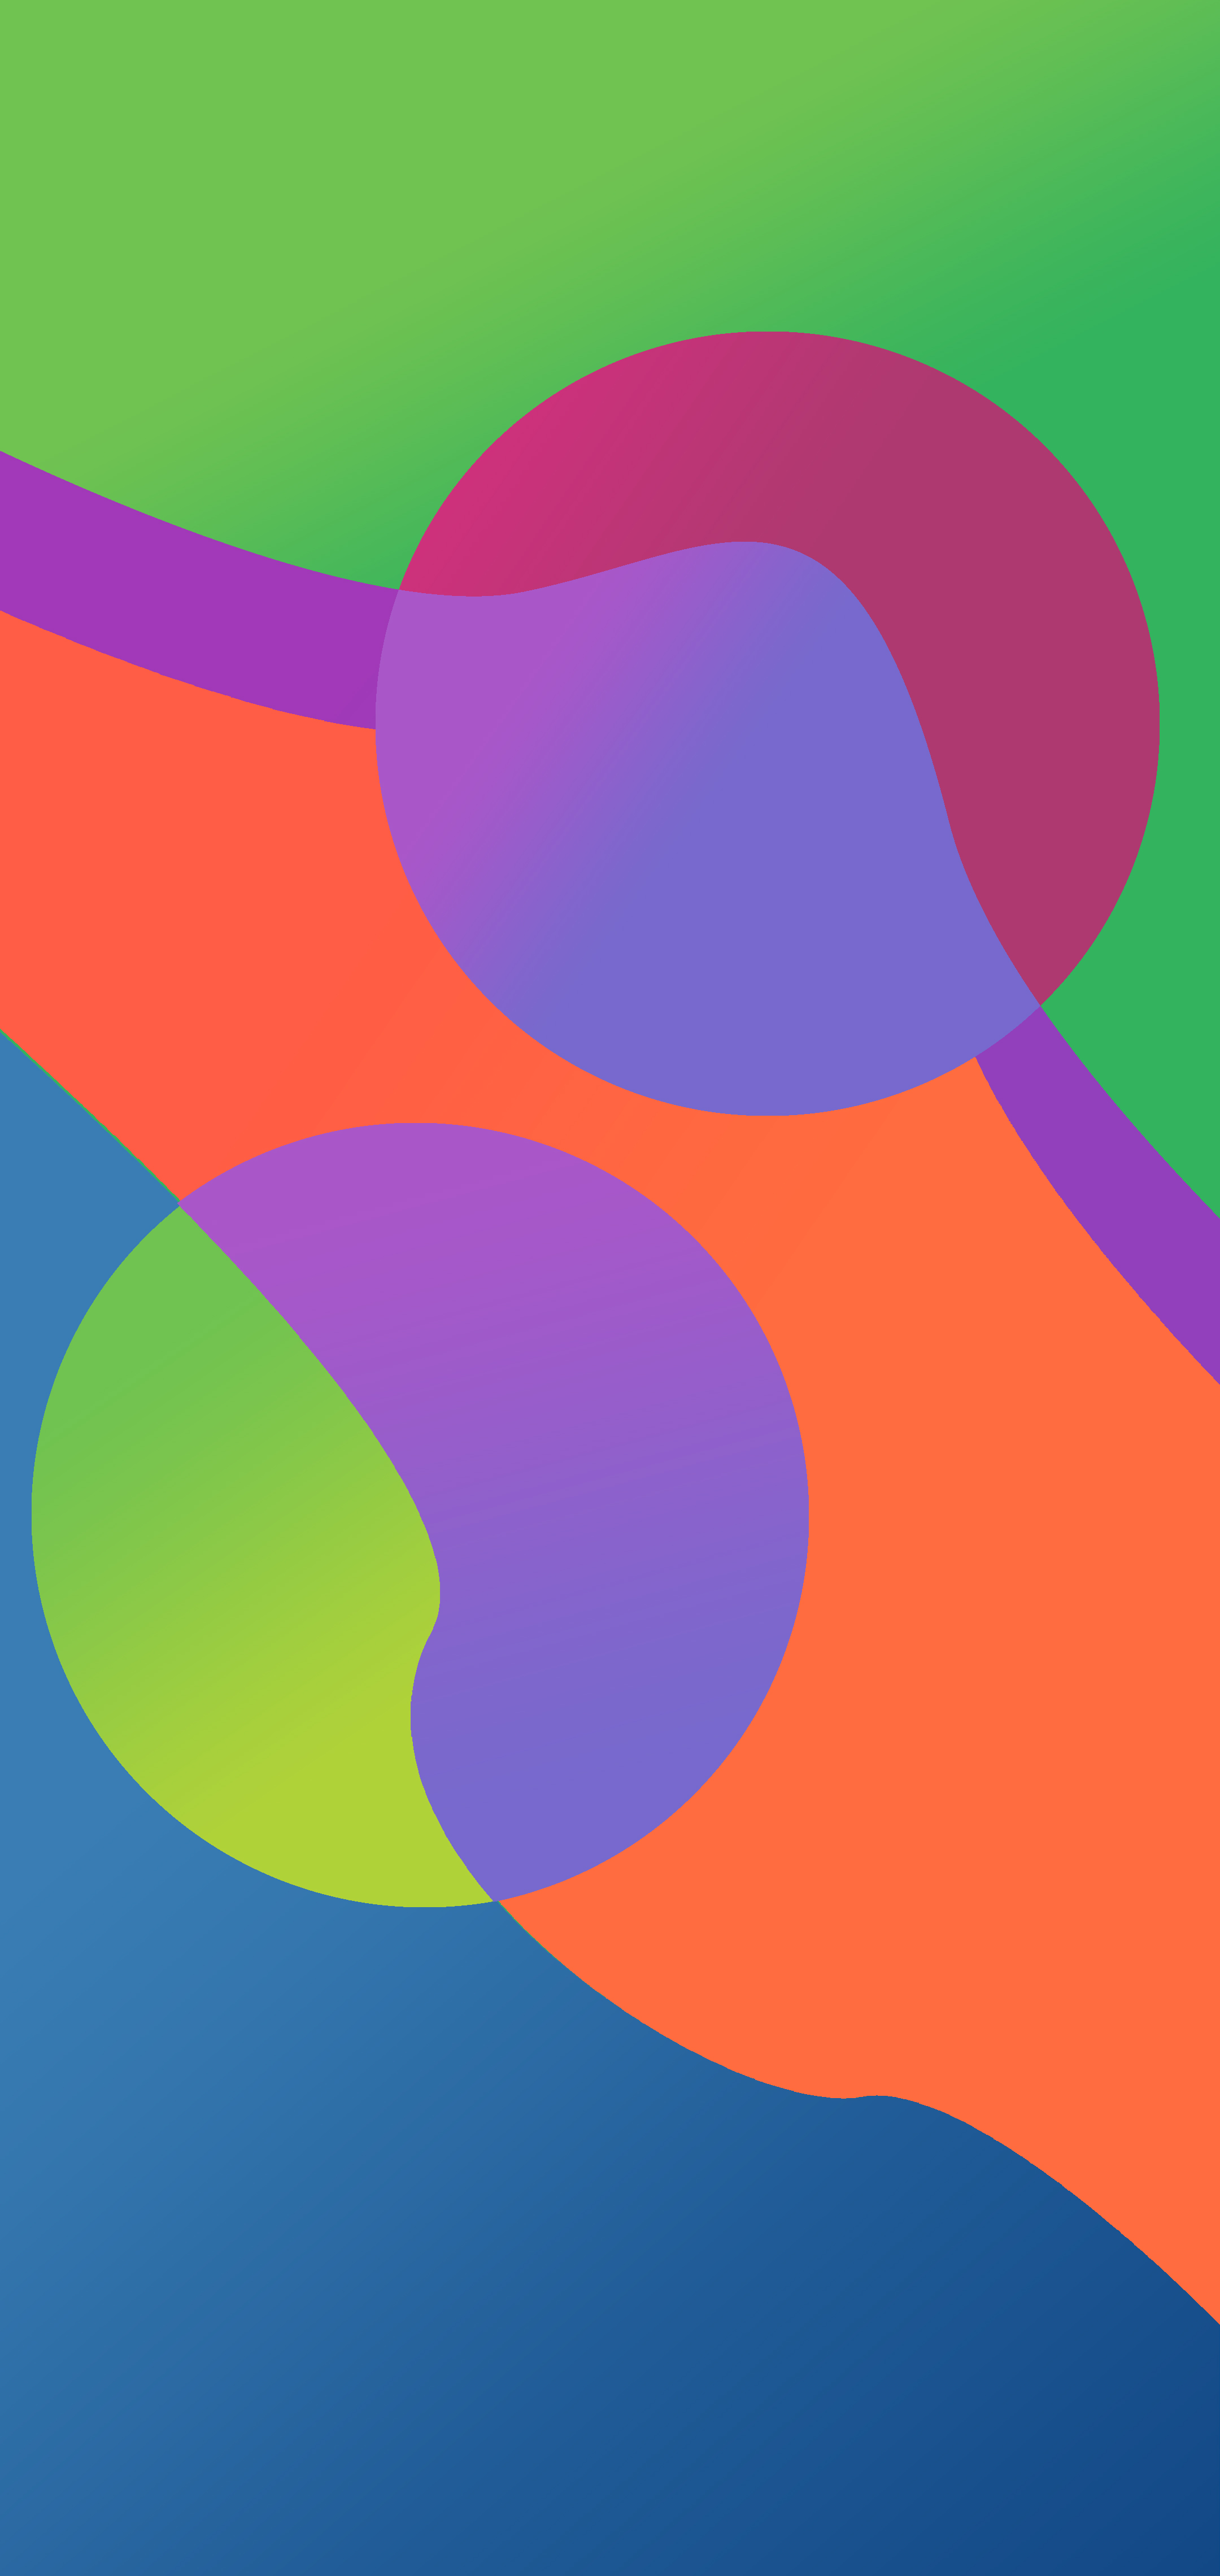 Minimalism Geometric Figures Colorful Shapes Digital Art Gradient Vertical Lines 2160x4560